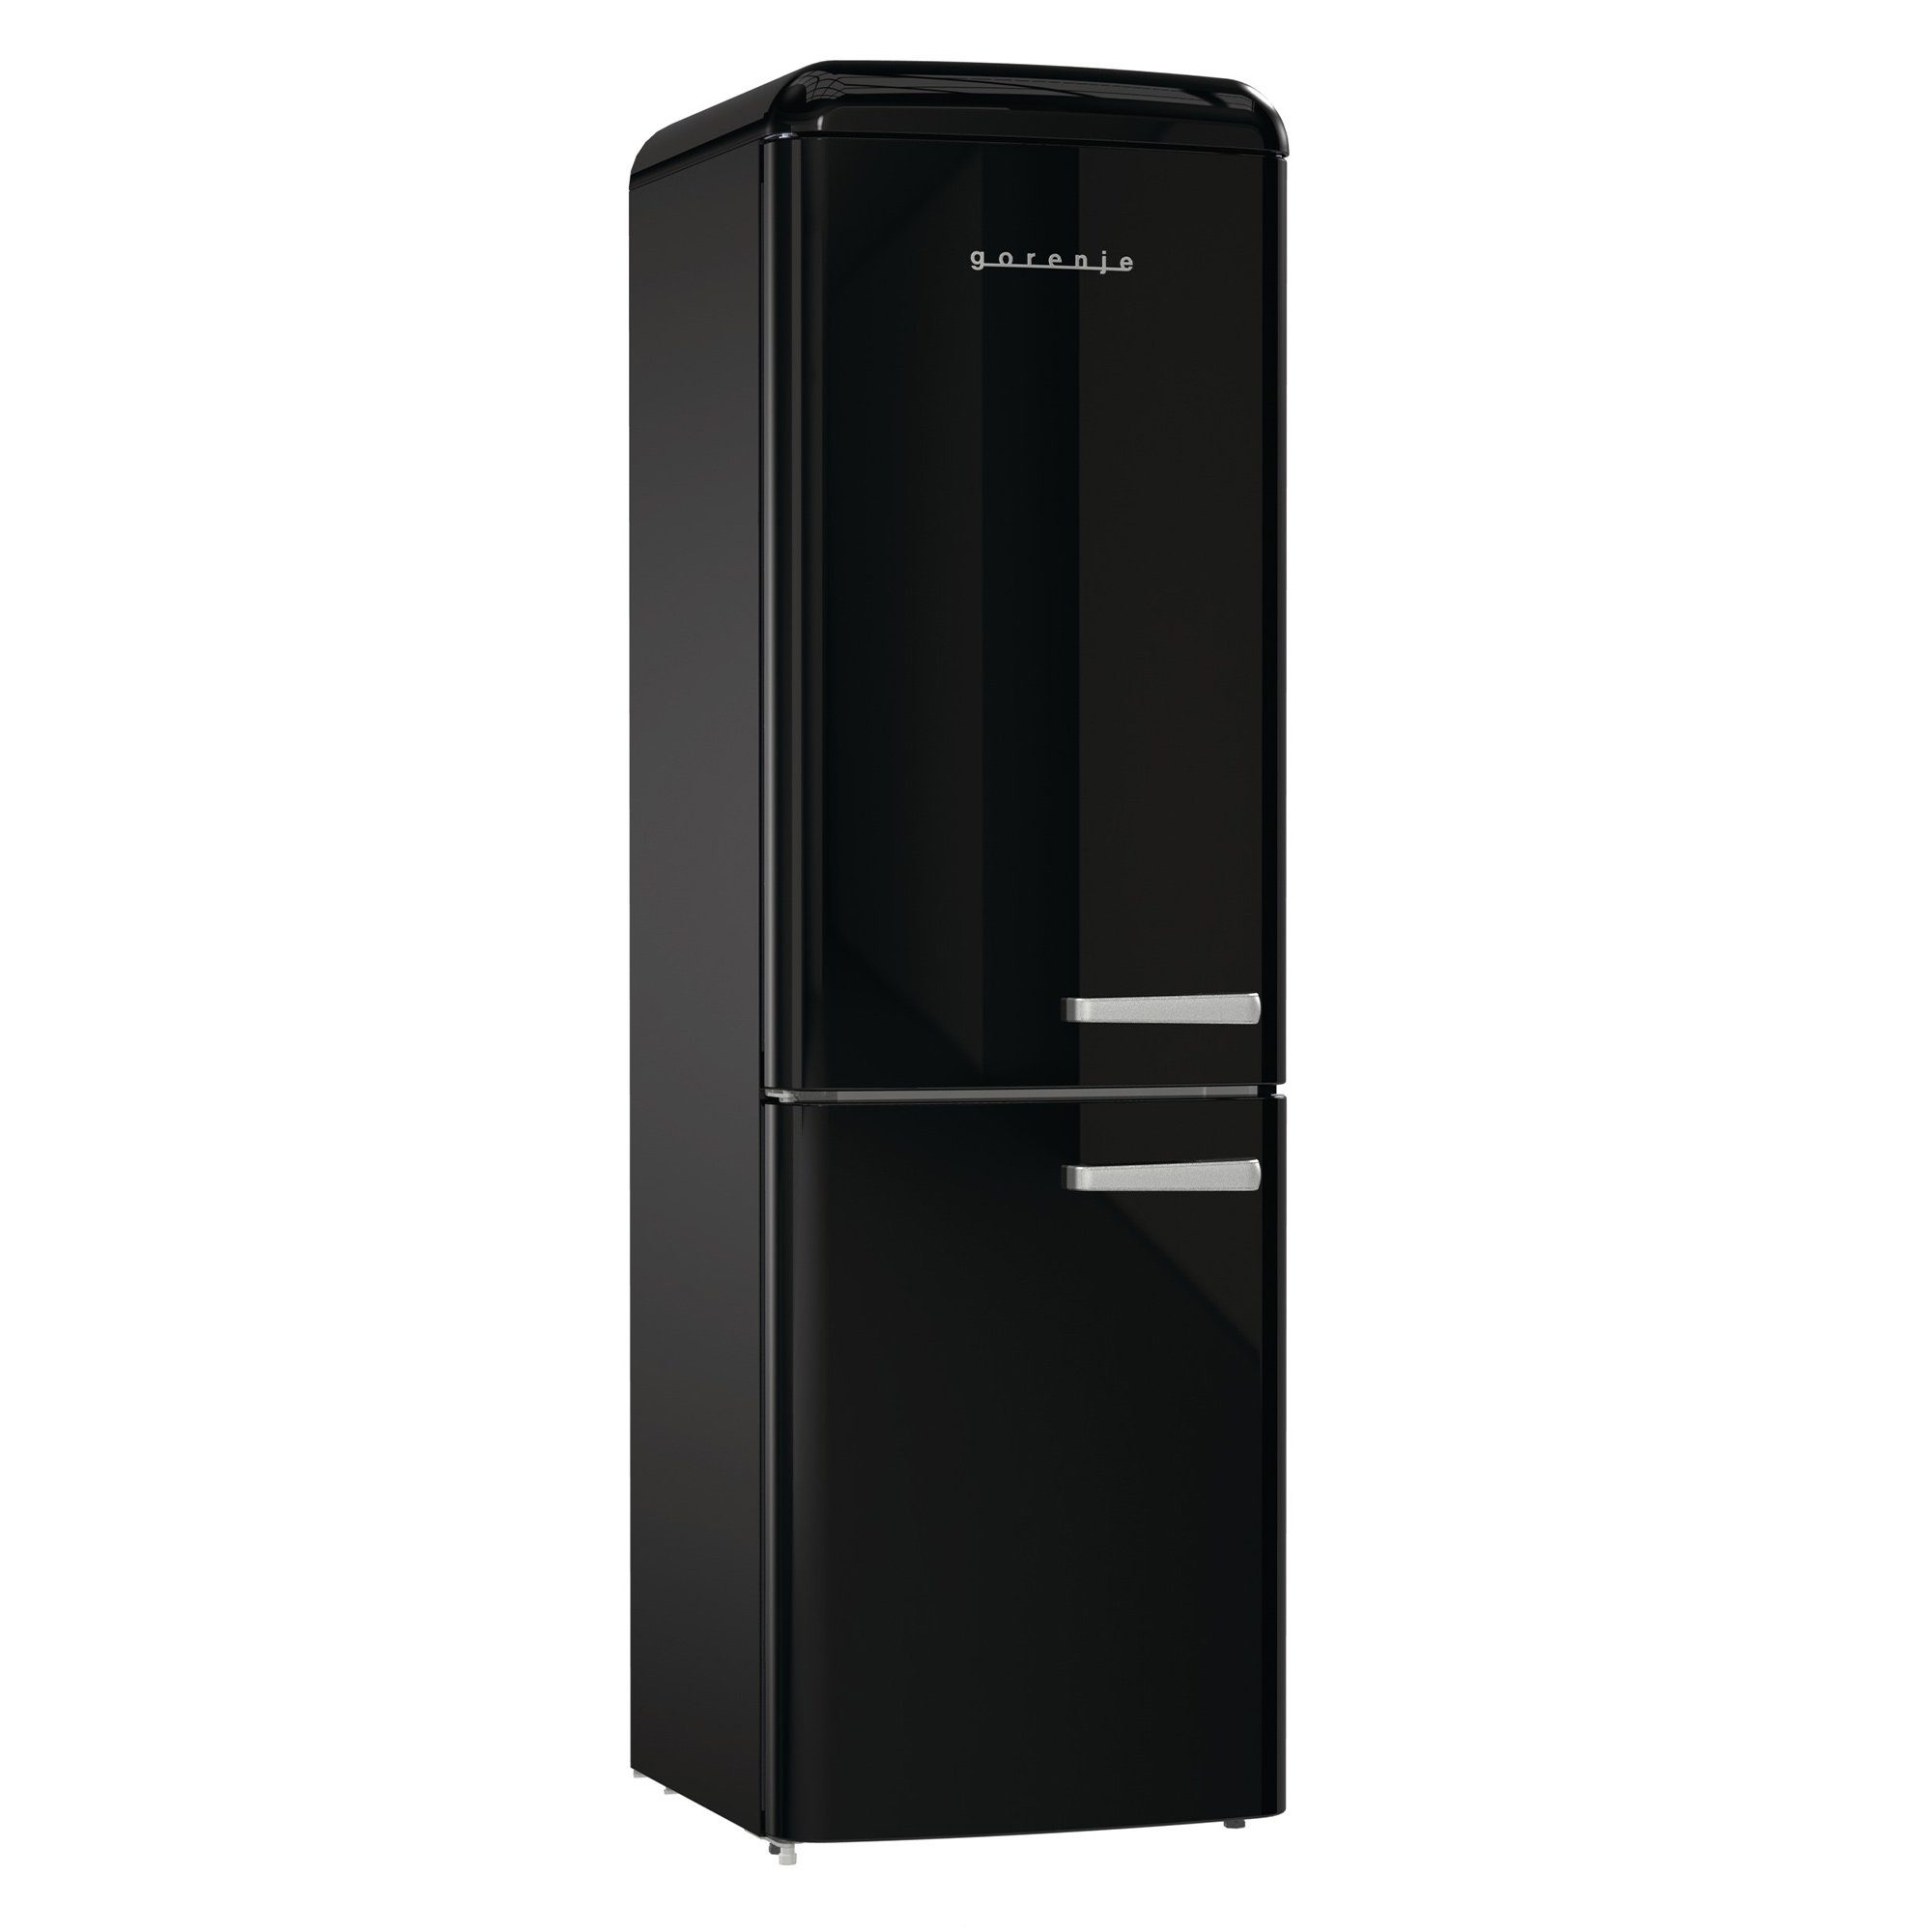 GORENJE Kühlschrank Retro ONRK619EBK-L, 194 cm hoch, 60 cm breit, CrispZone  mit Feuchteregler, AdaptTech, EcoMode-Programm